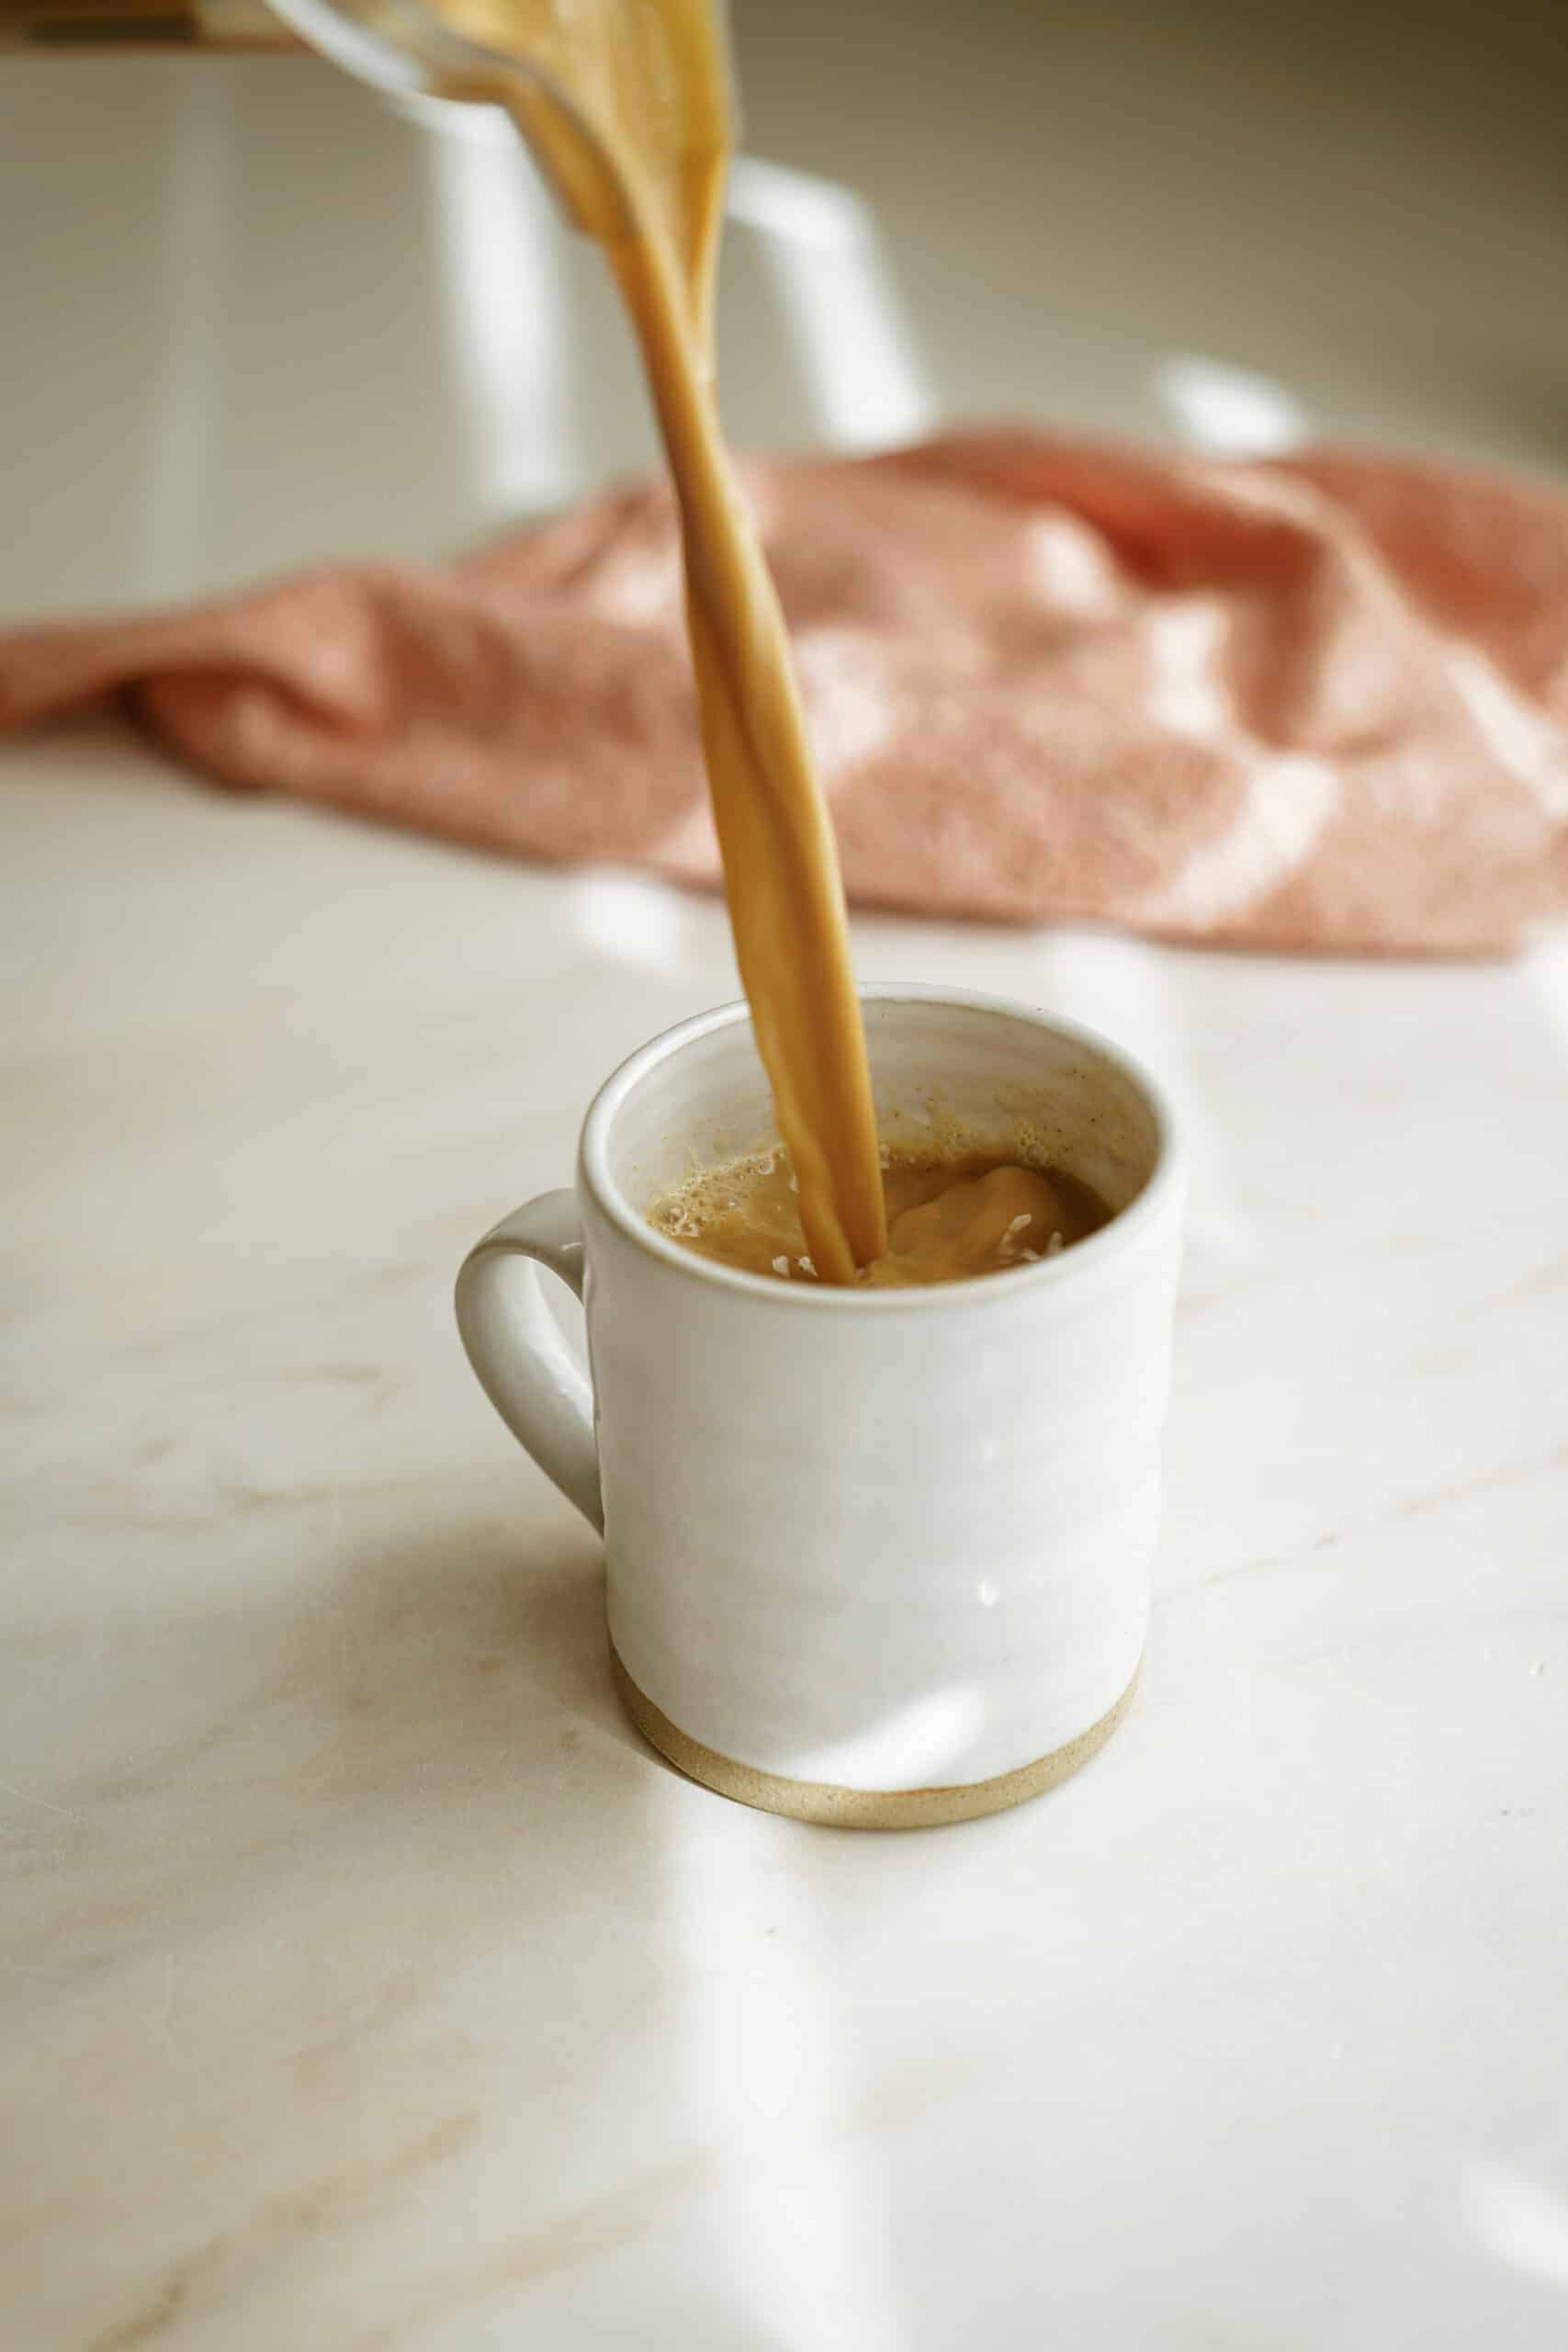 Pumpkin spice latte being poured into a mug